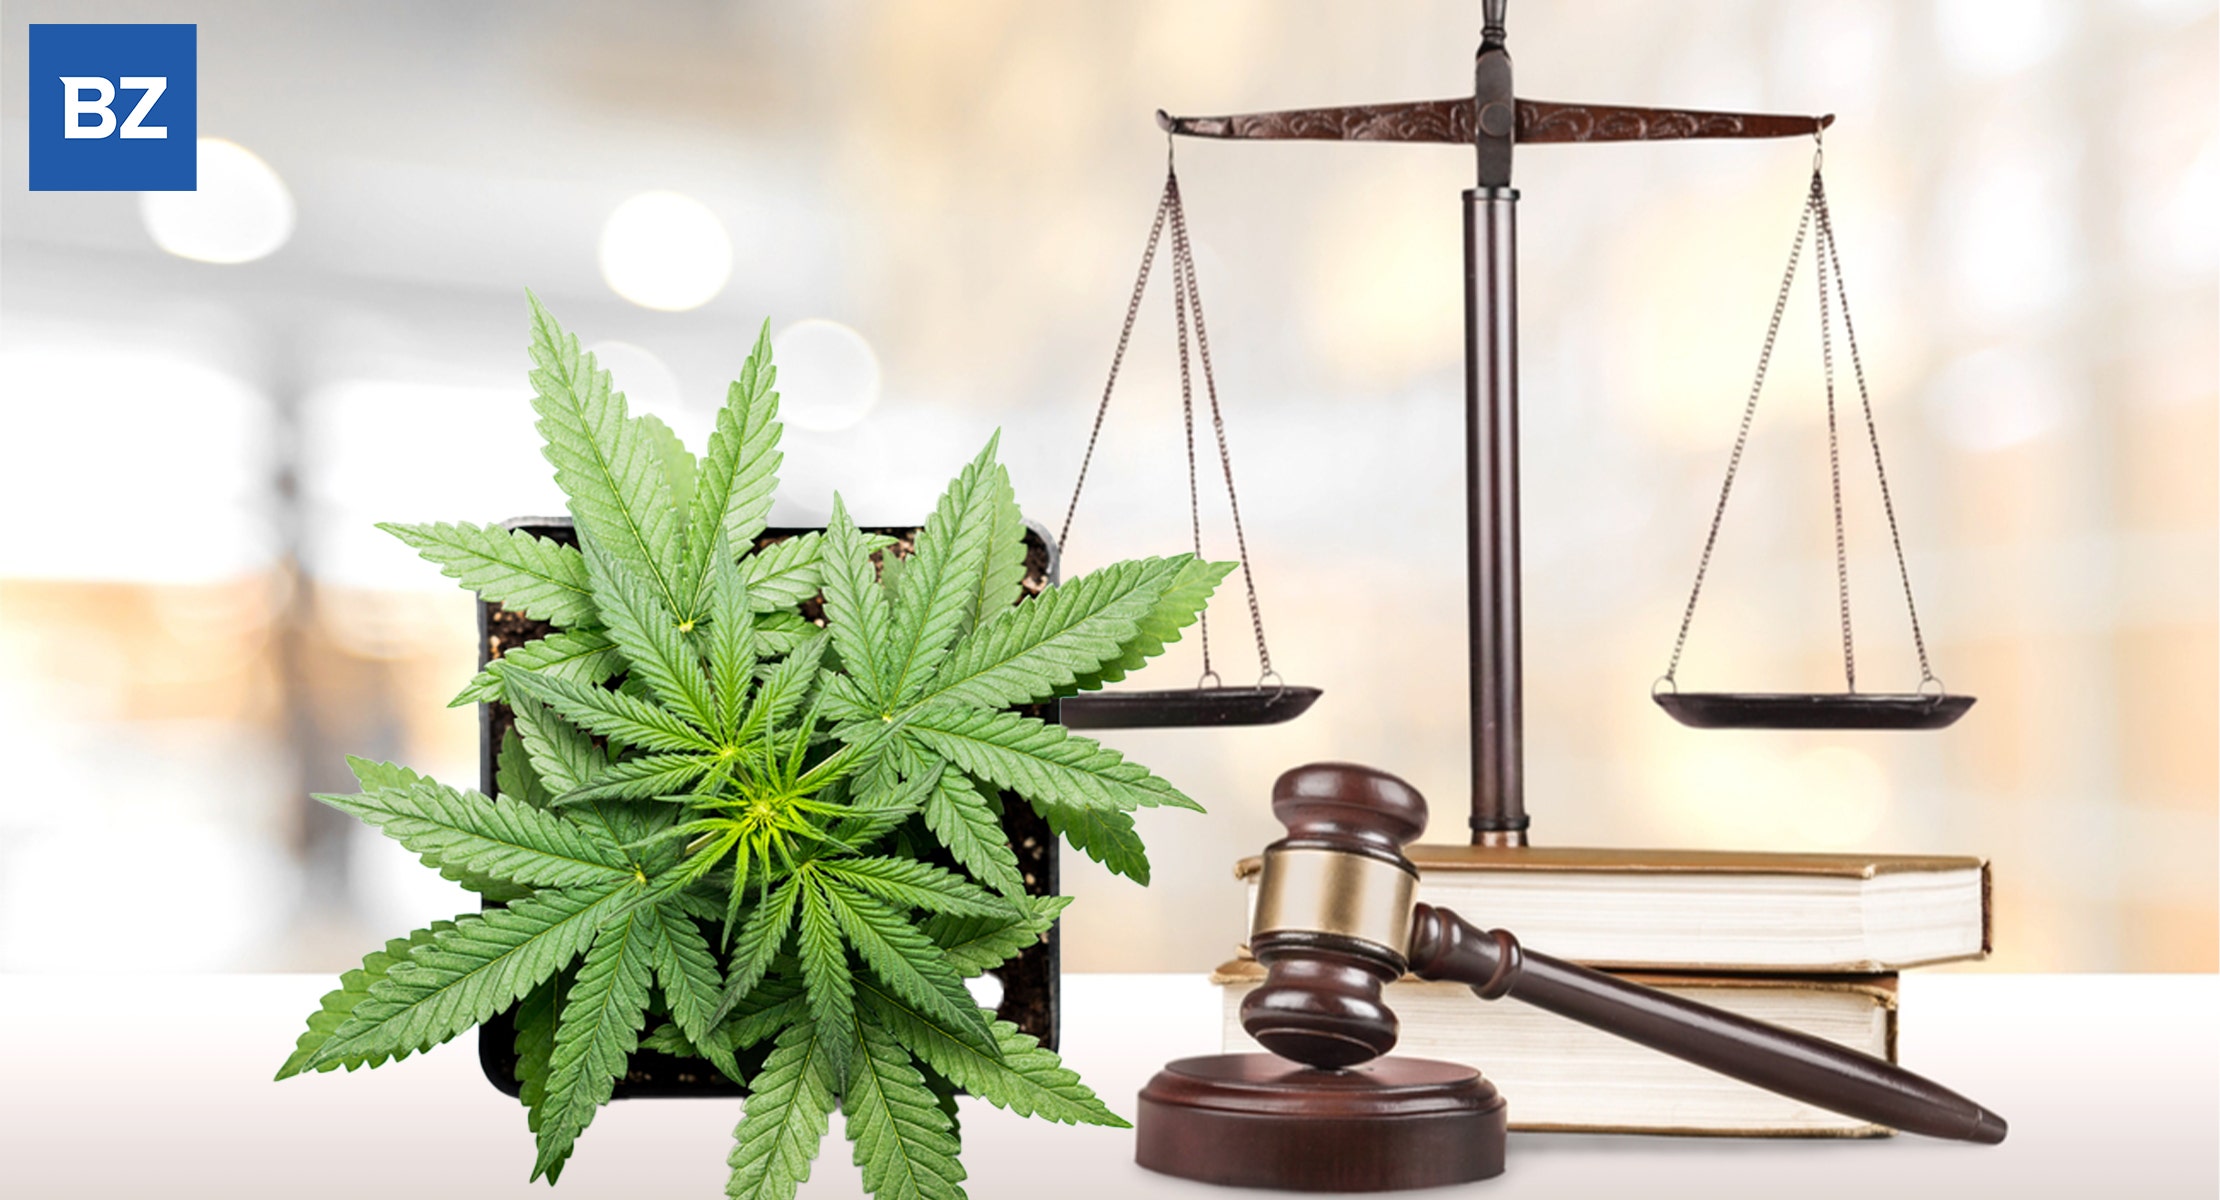 GOP Rep. Greg Steube Re-Introduces Bill Re-Schedule Marijuana, Make It Less Restrictive